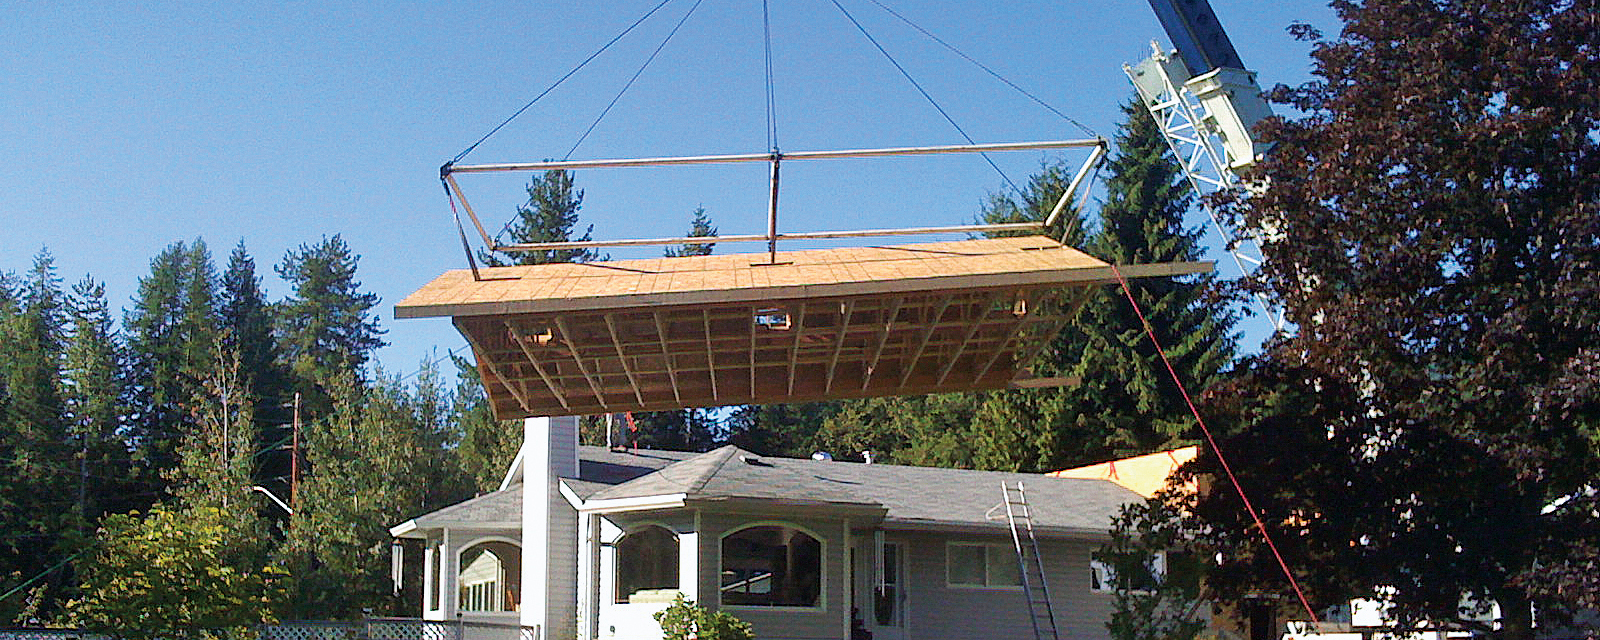 Crane lifting roof onto house addition. 